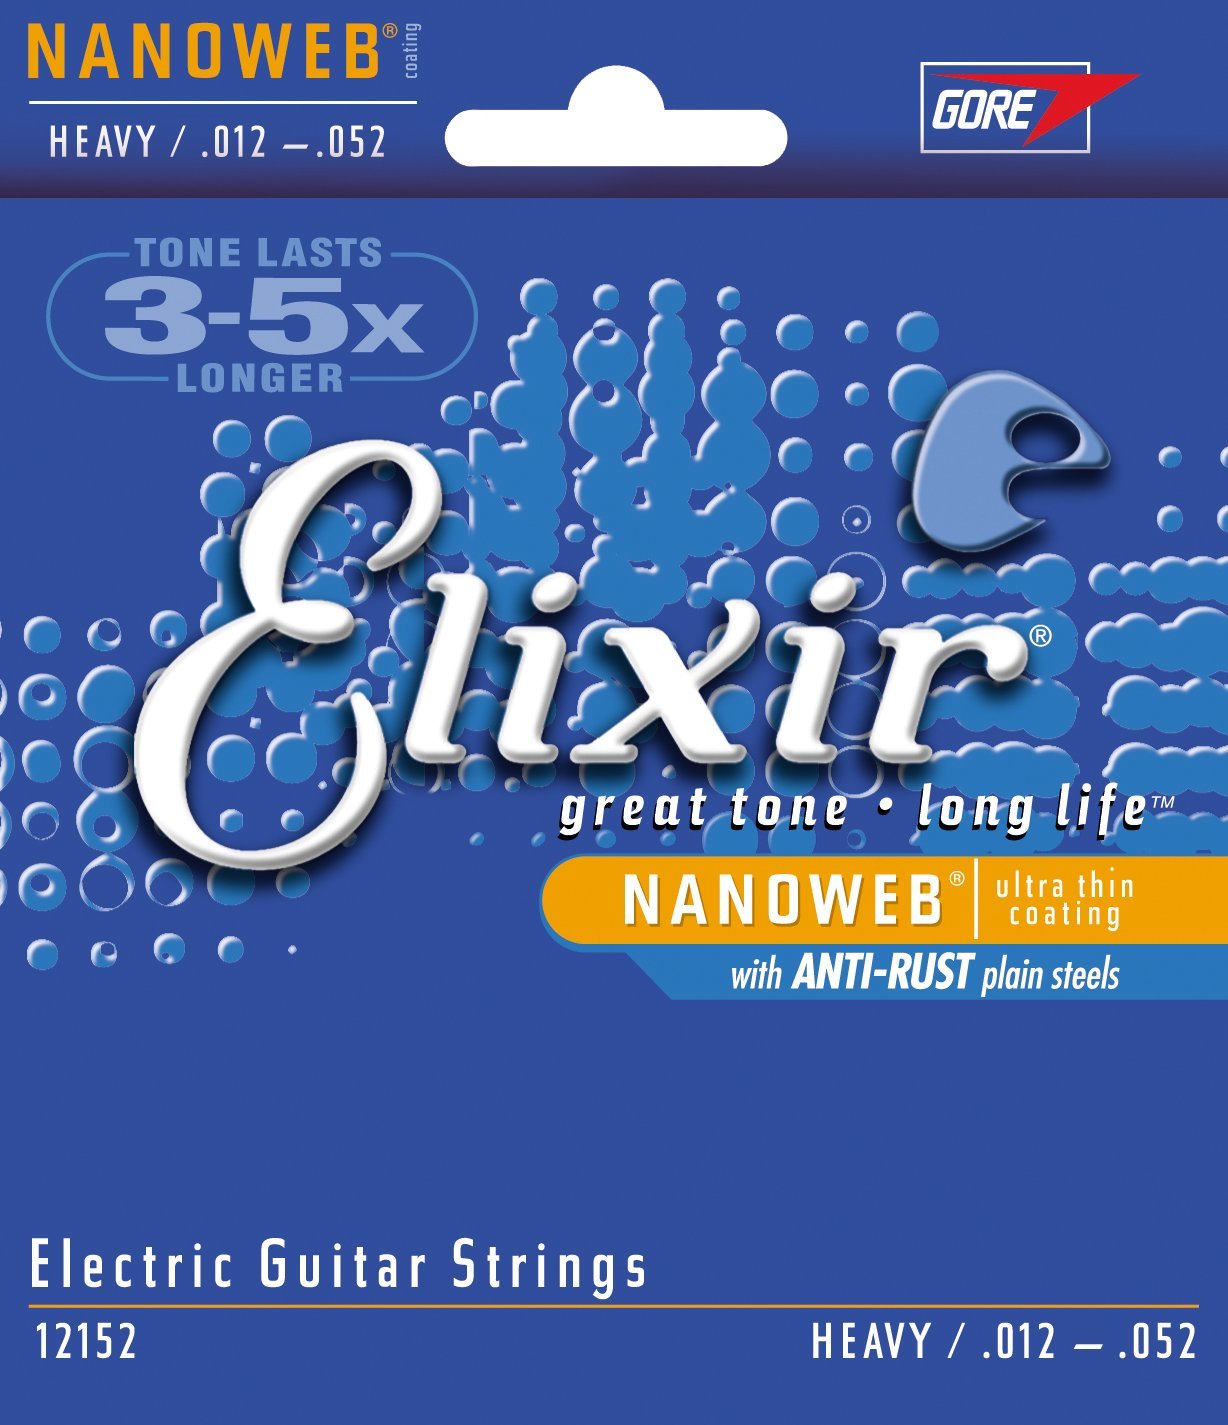 Elixir 12152 Electric Guitar Strings with NANOWEB Coating, Heavy (.012-.052)